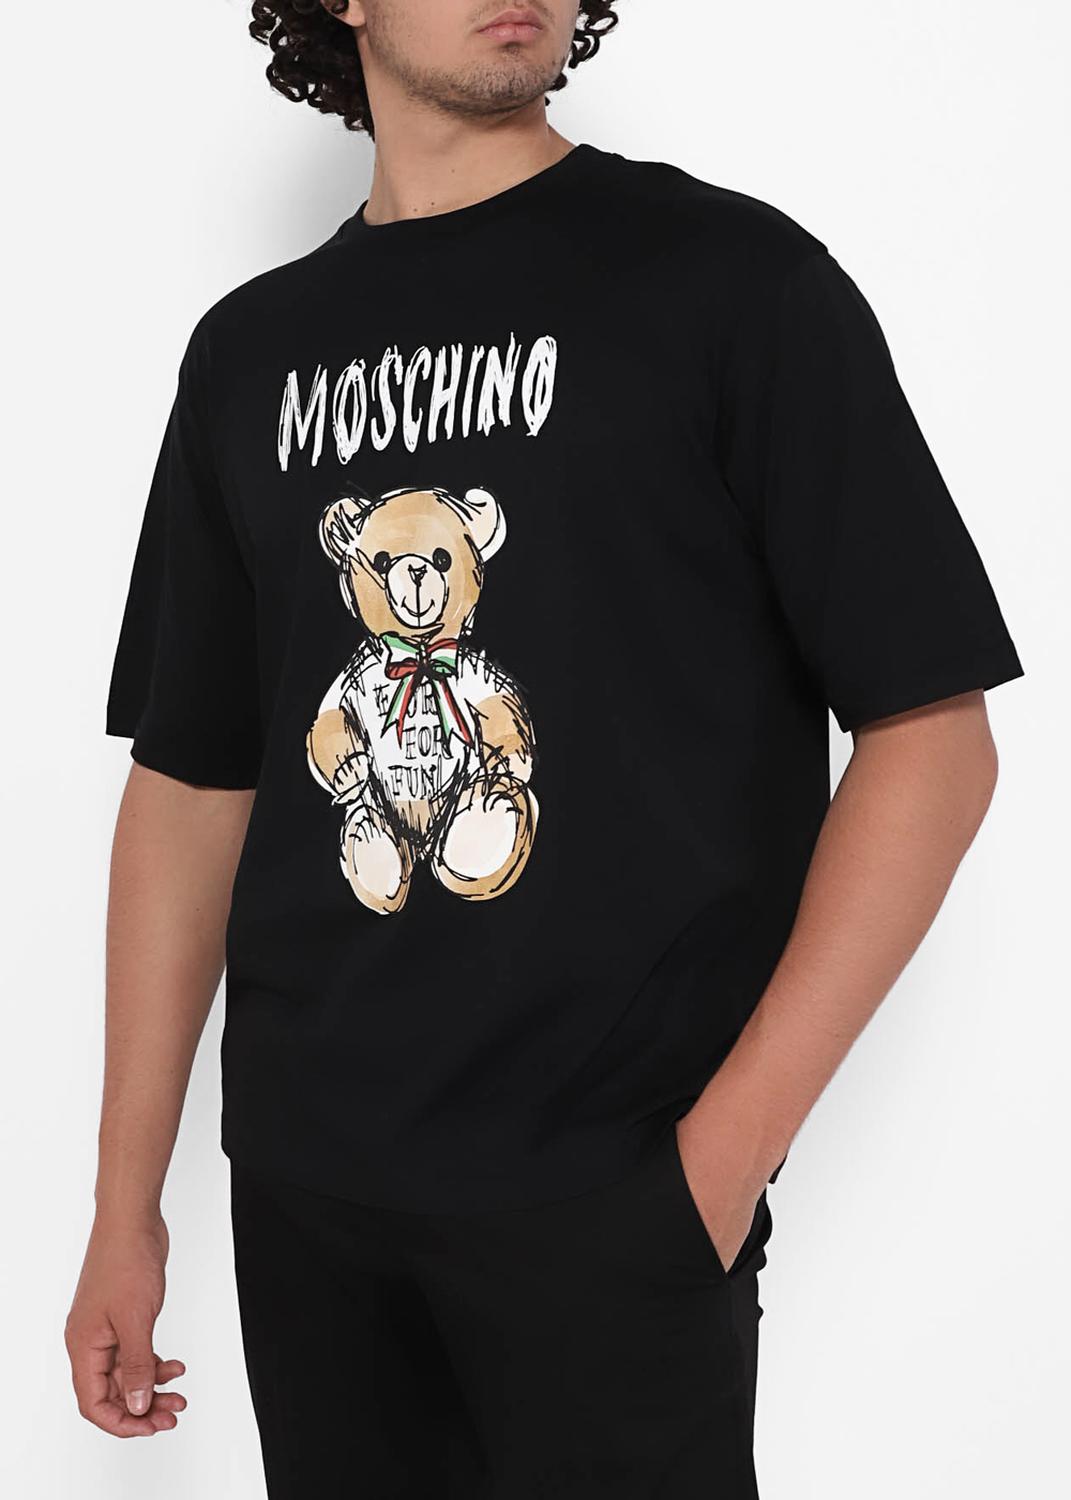 Moschino T-Shirt con estampado Surfer Teddy Bear MSC-V0717 - LOUDER Lifestyle